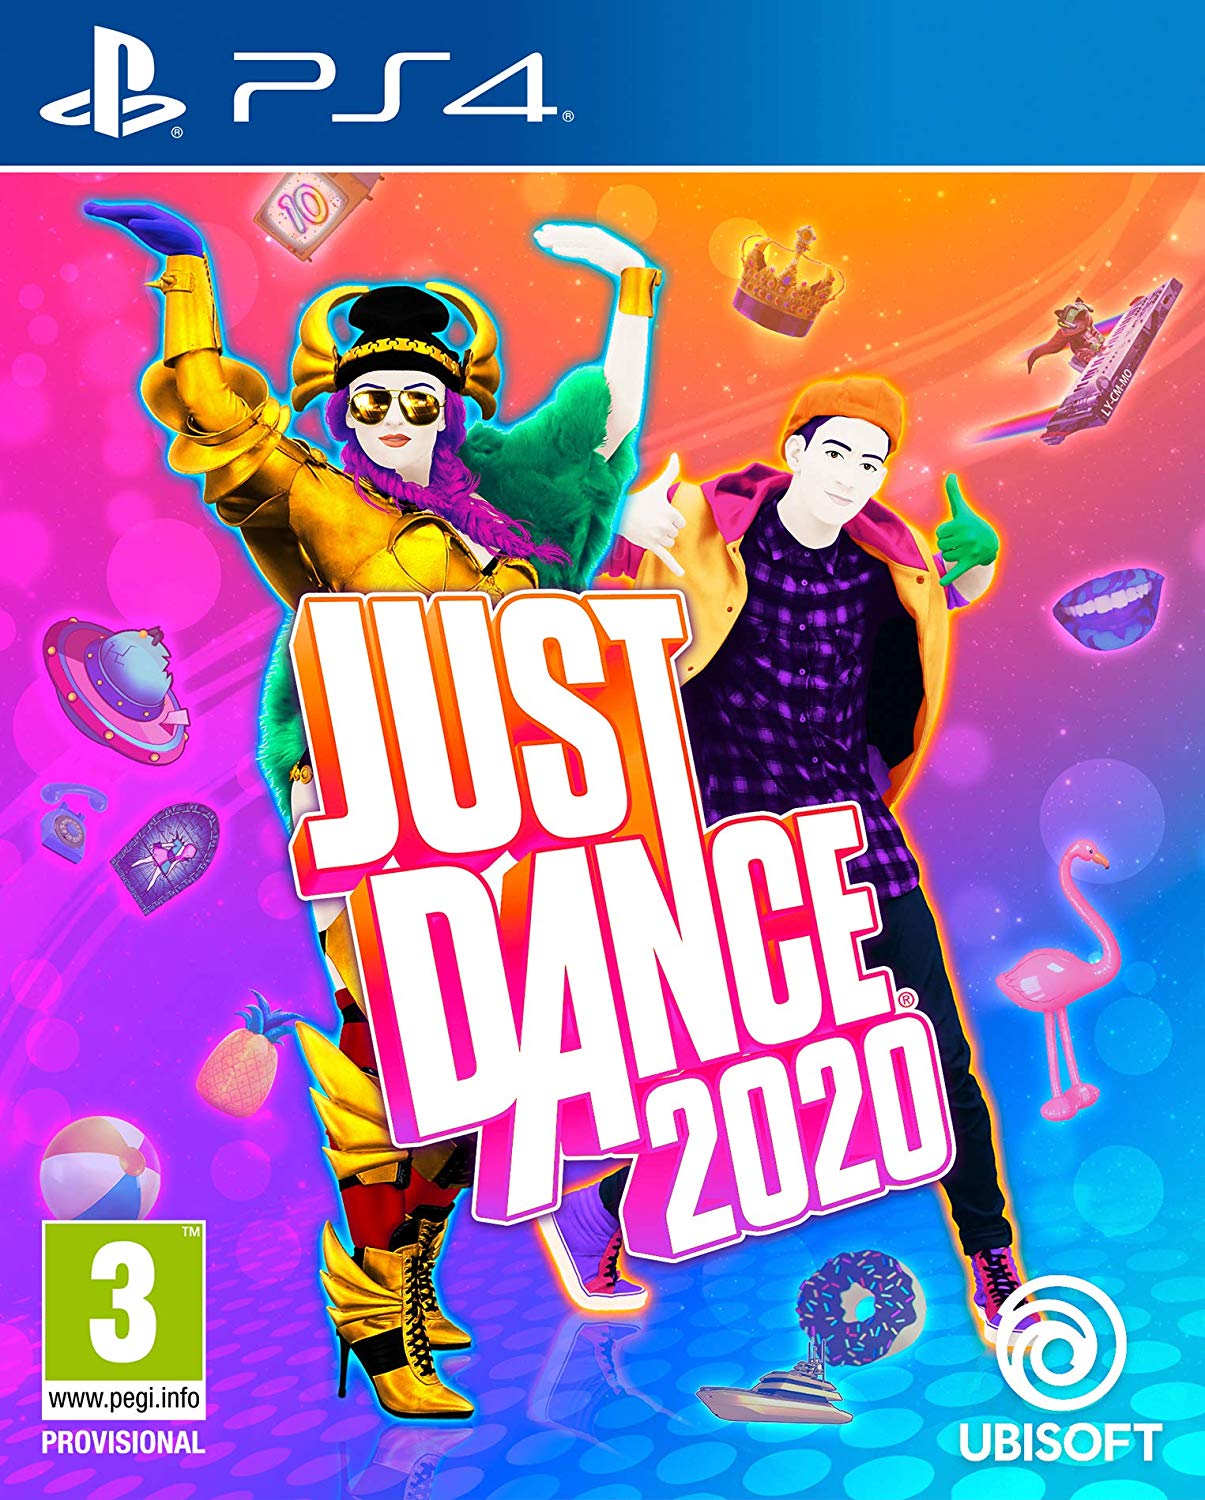 just dance 2020 on sale